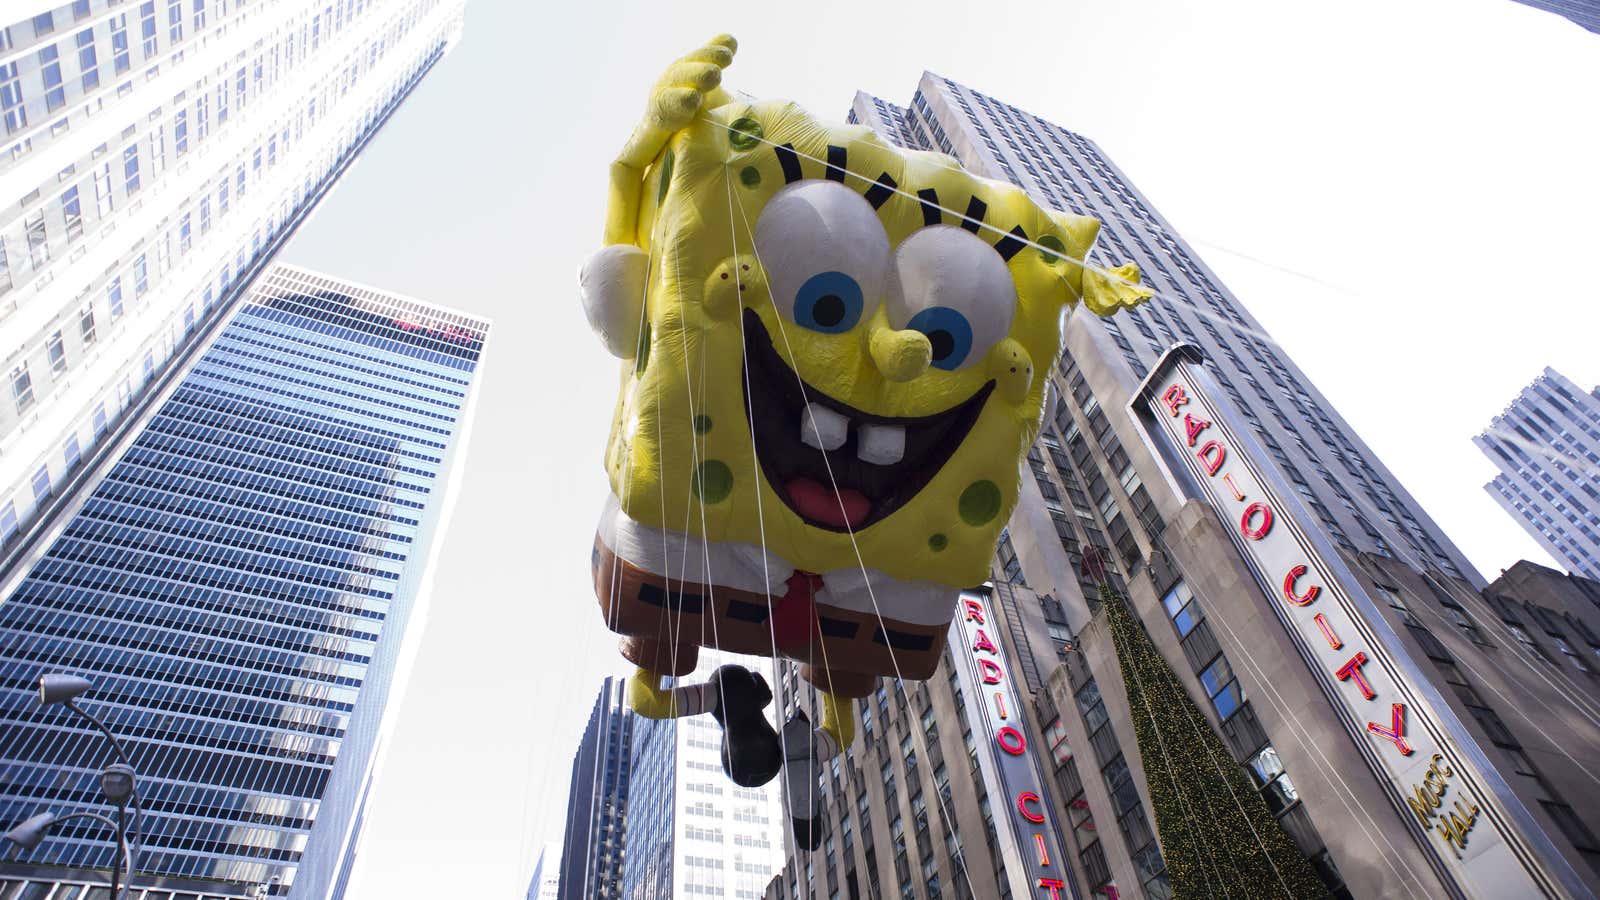 SpongeBob SquarePants turns 20 years old Wednesday, May 1.